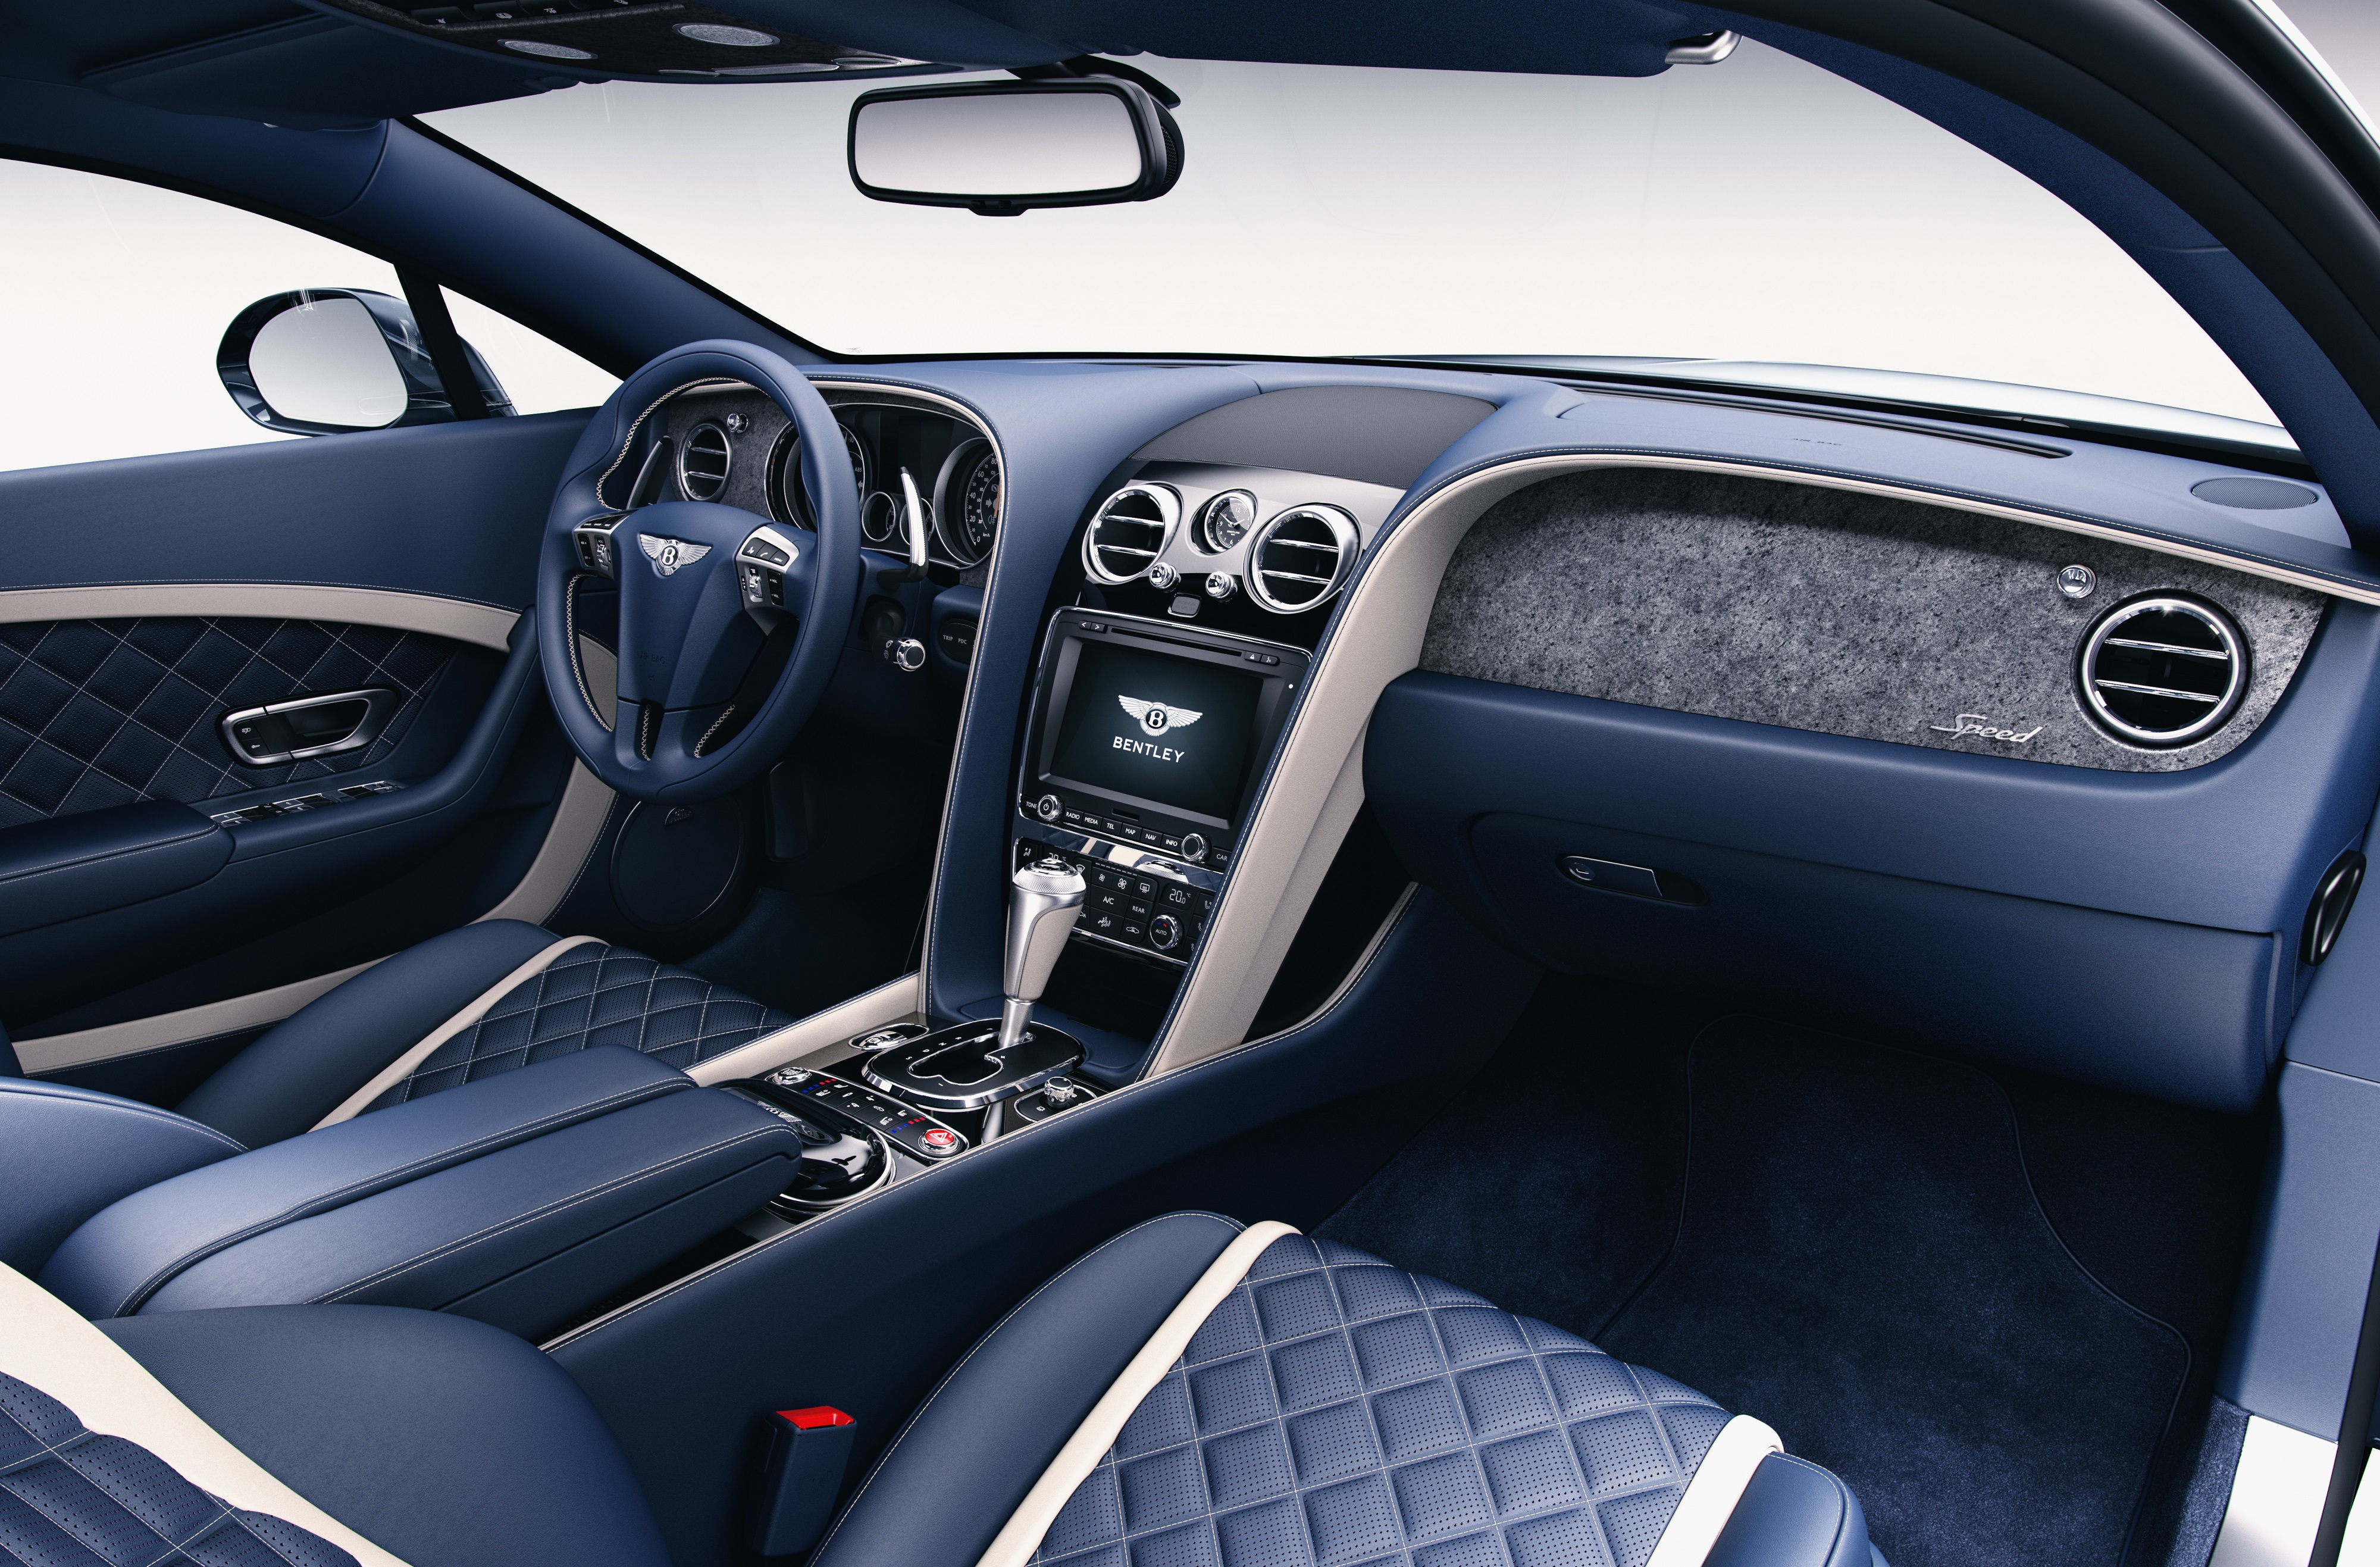 Cars inside. Bentley Continental gt салон. Салон Бентли Континенталь gt 2. Bentley Continental gt Interior. Bentley Continental gt 2016 Interior.